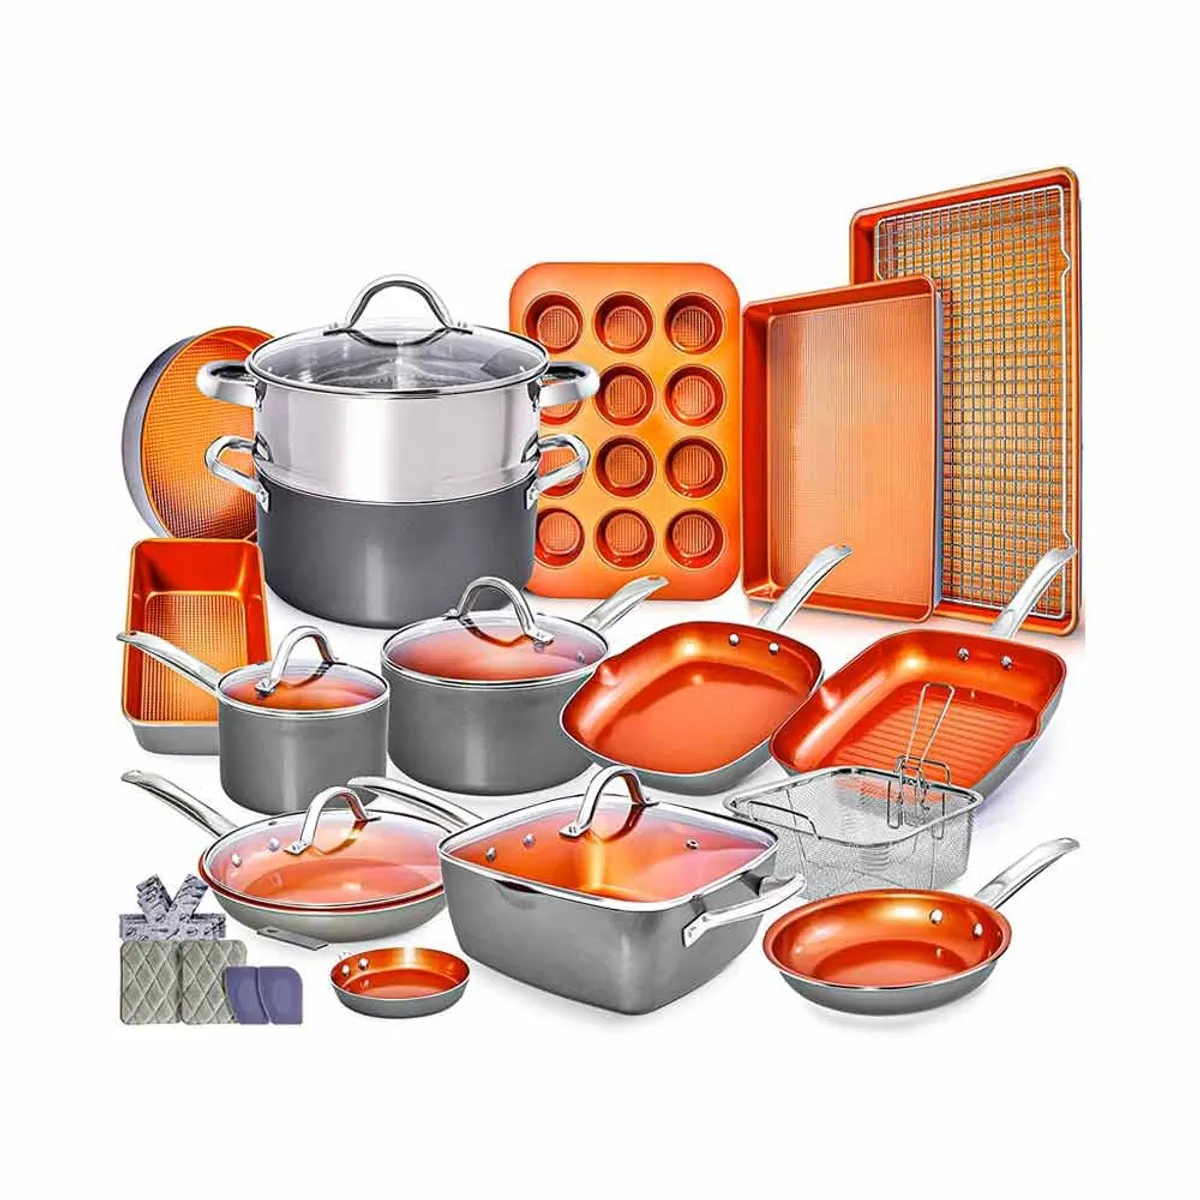 Home Hero Copper Pots and Pans Set -23pc Copper Cookware Set